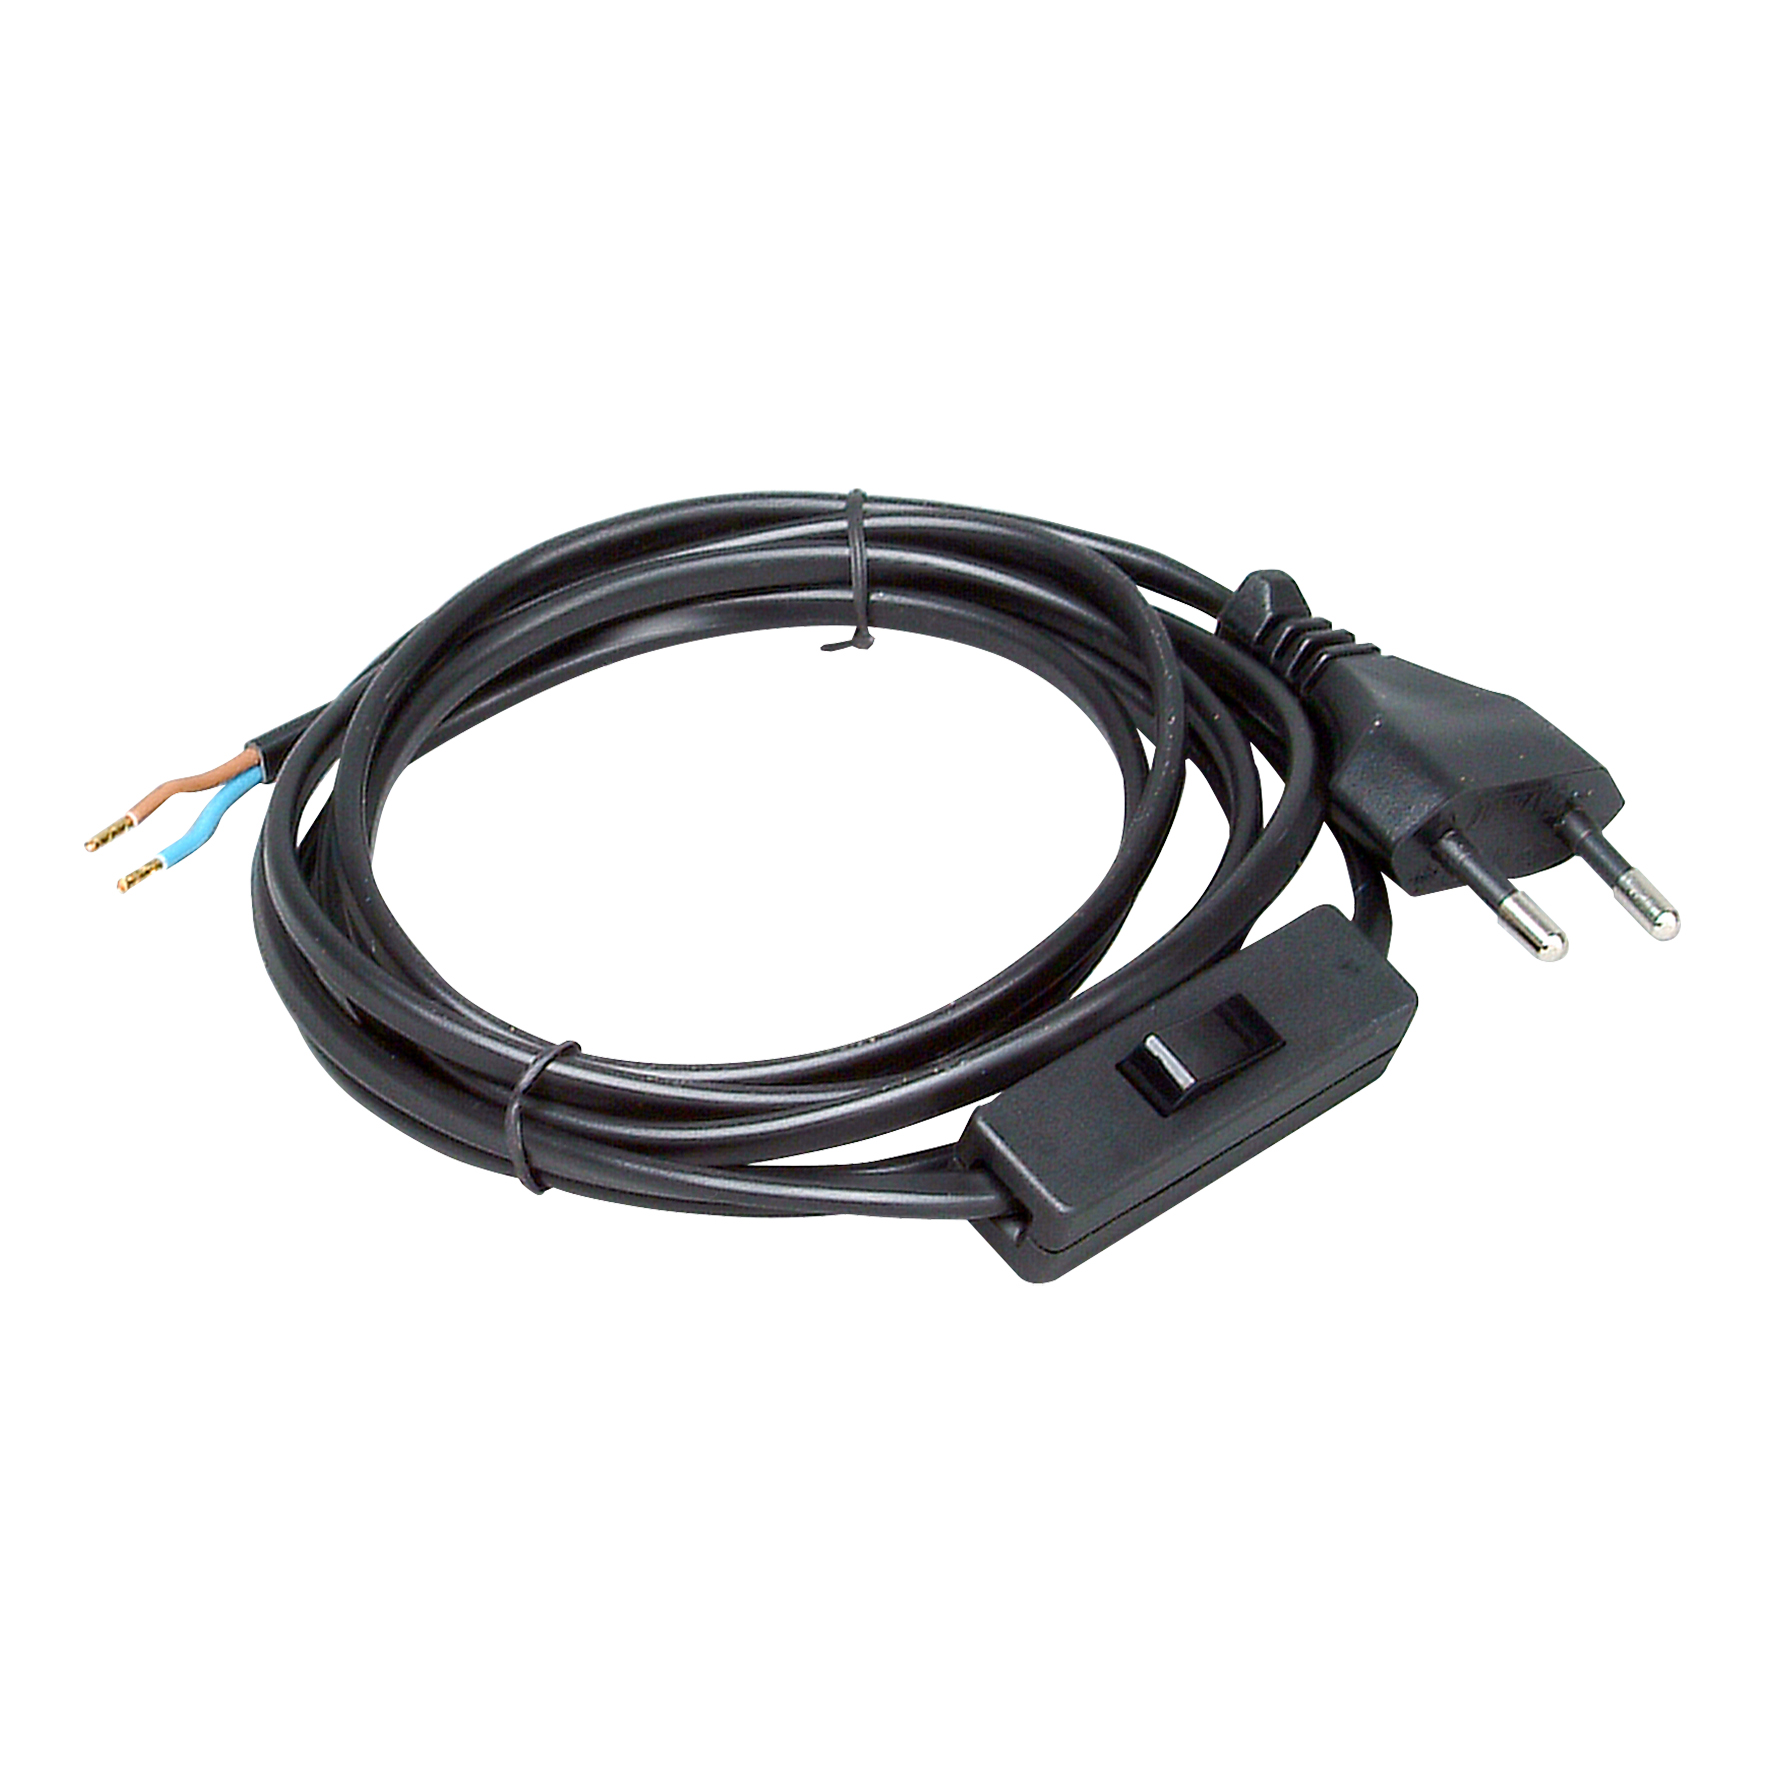 Kopp 140305098 Cable Euro plug & Switch 2M Black